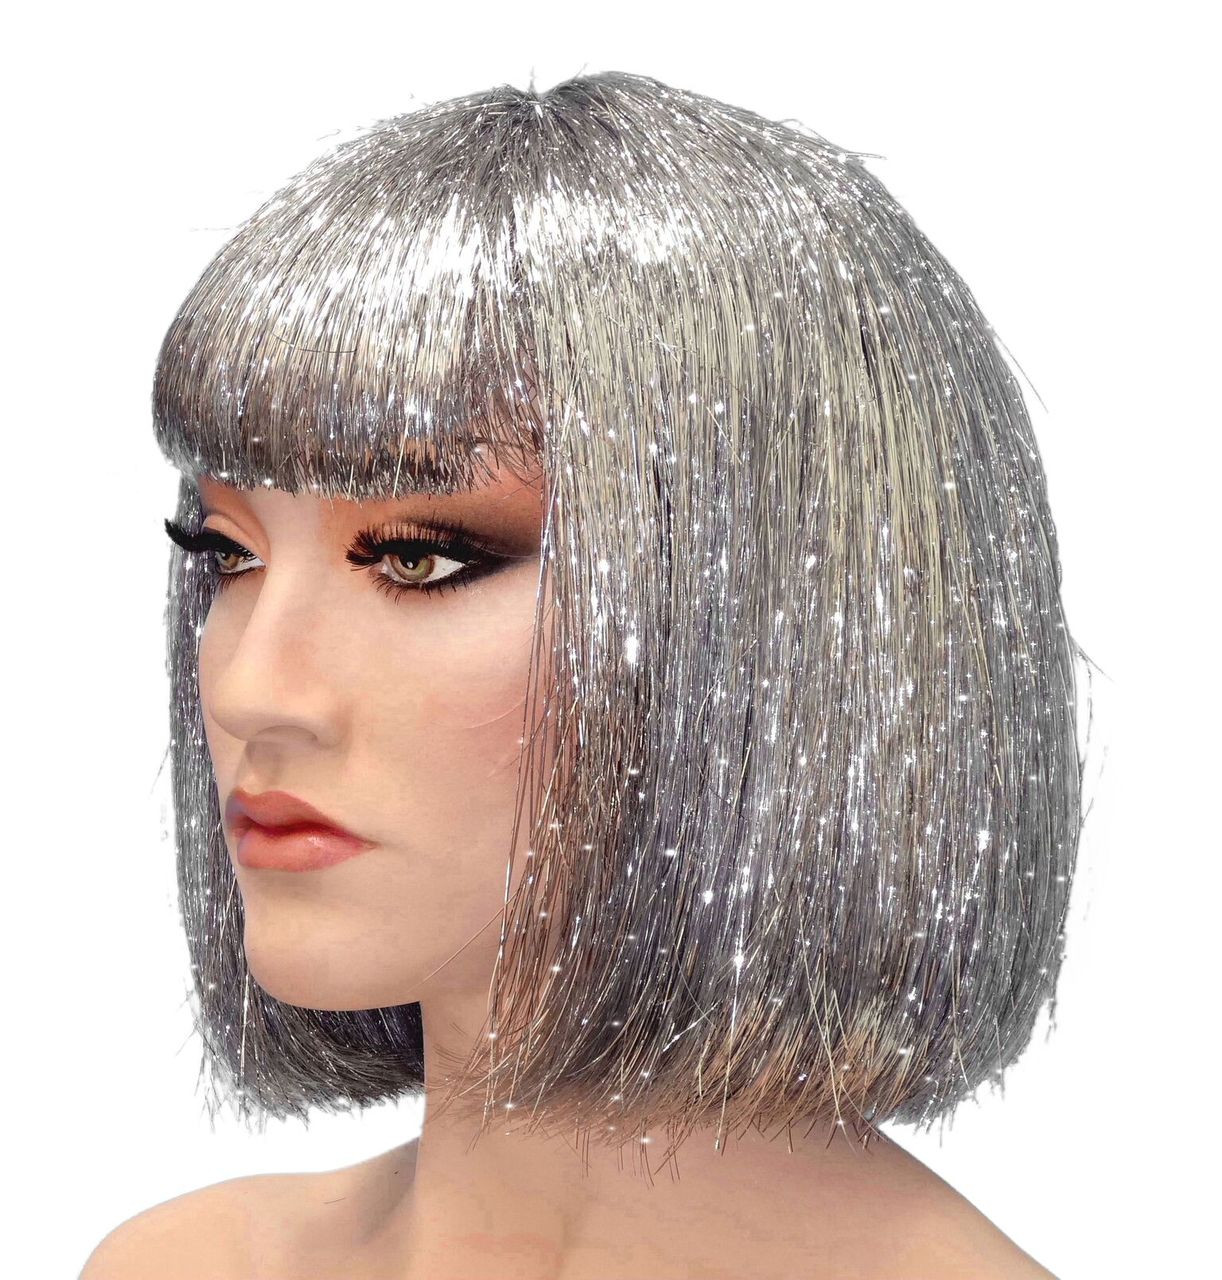 silver costume wig